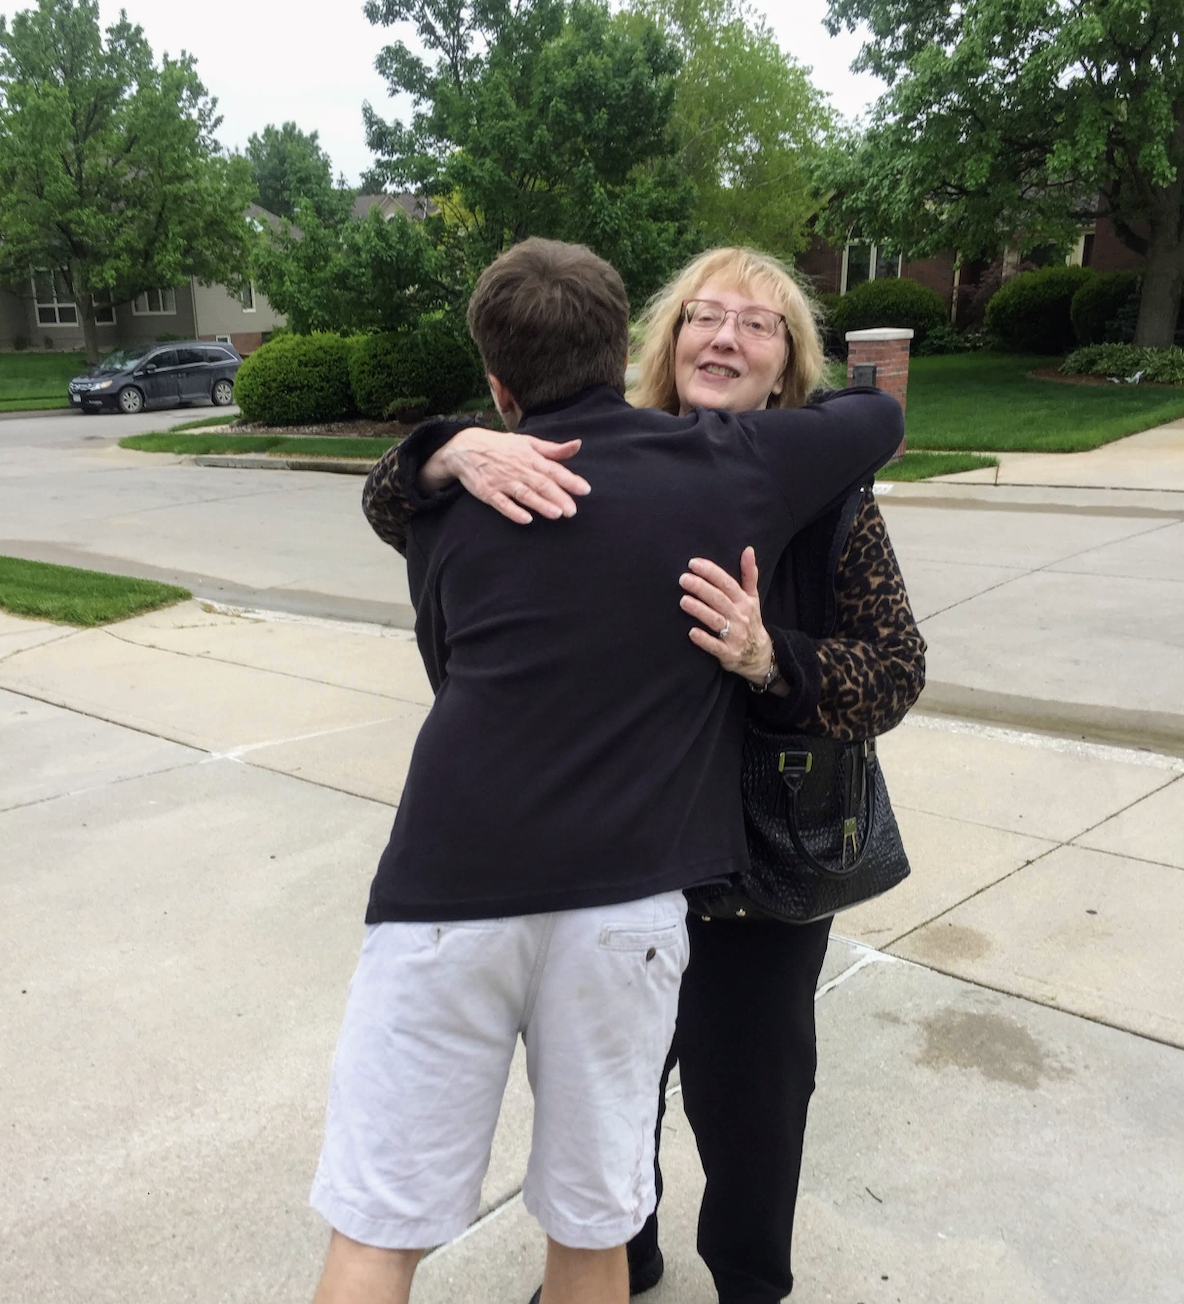 2018 - Grant gives Aunt Joanie a hug